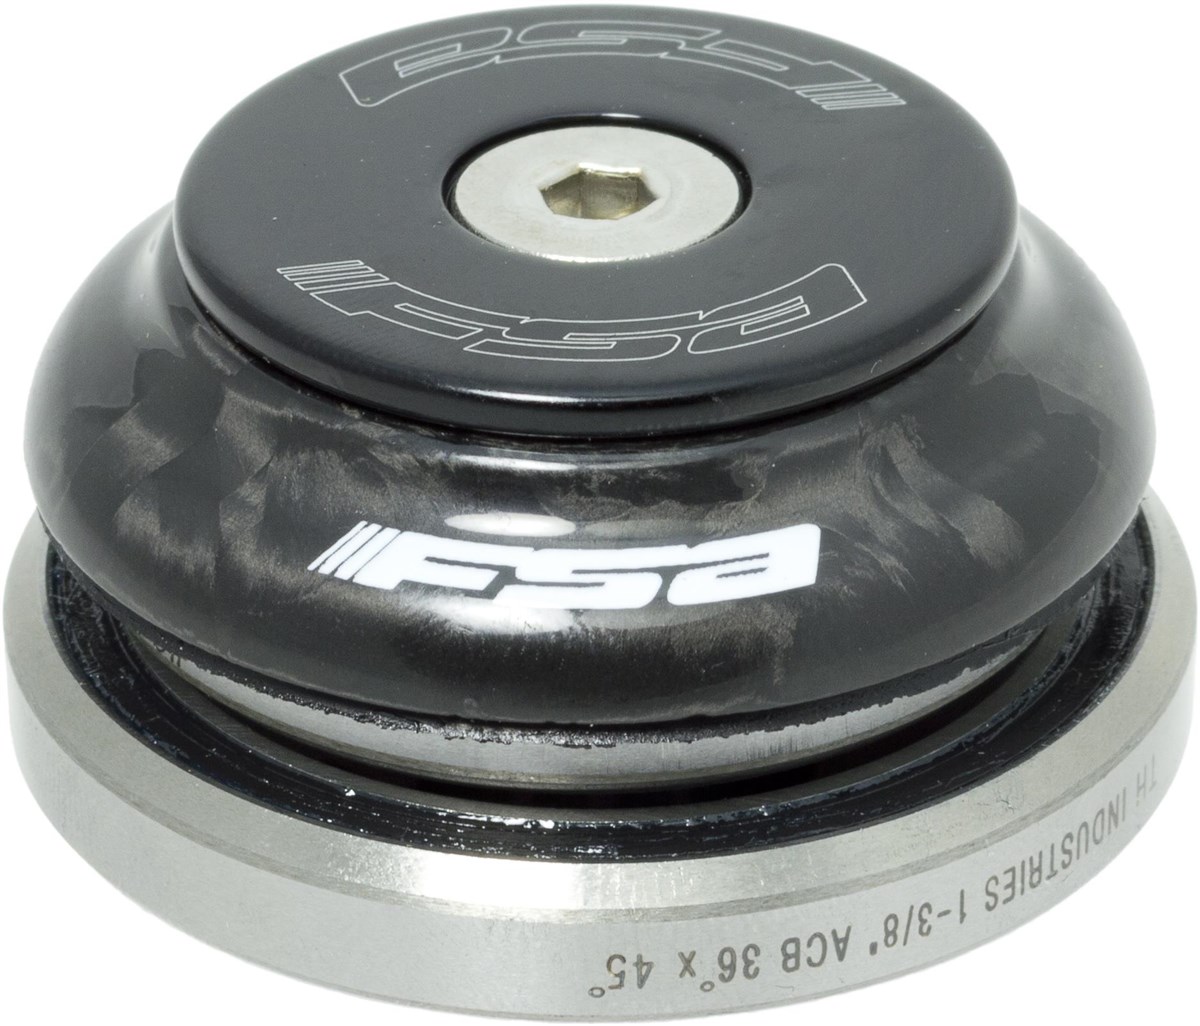 FSA Orbit IS 138 Headset product image